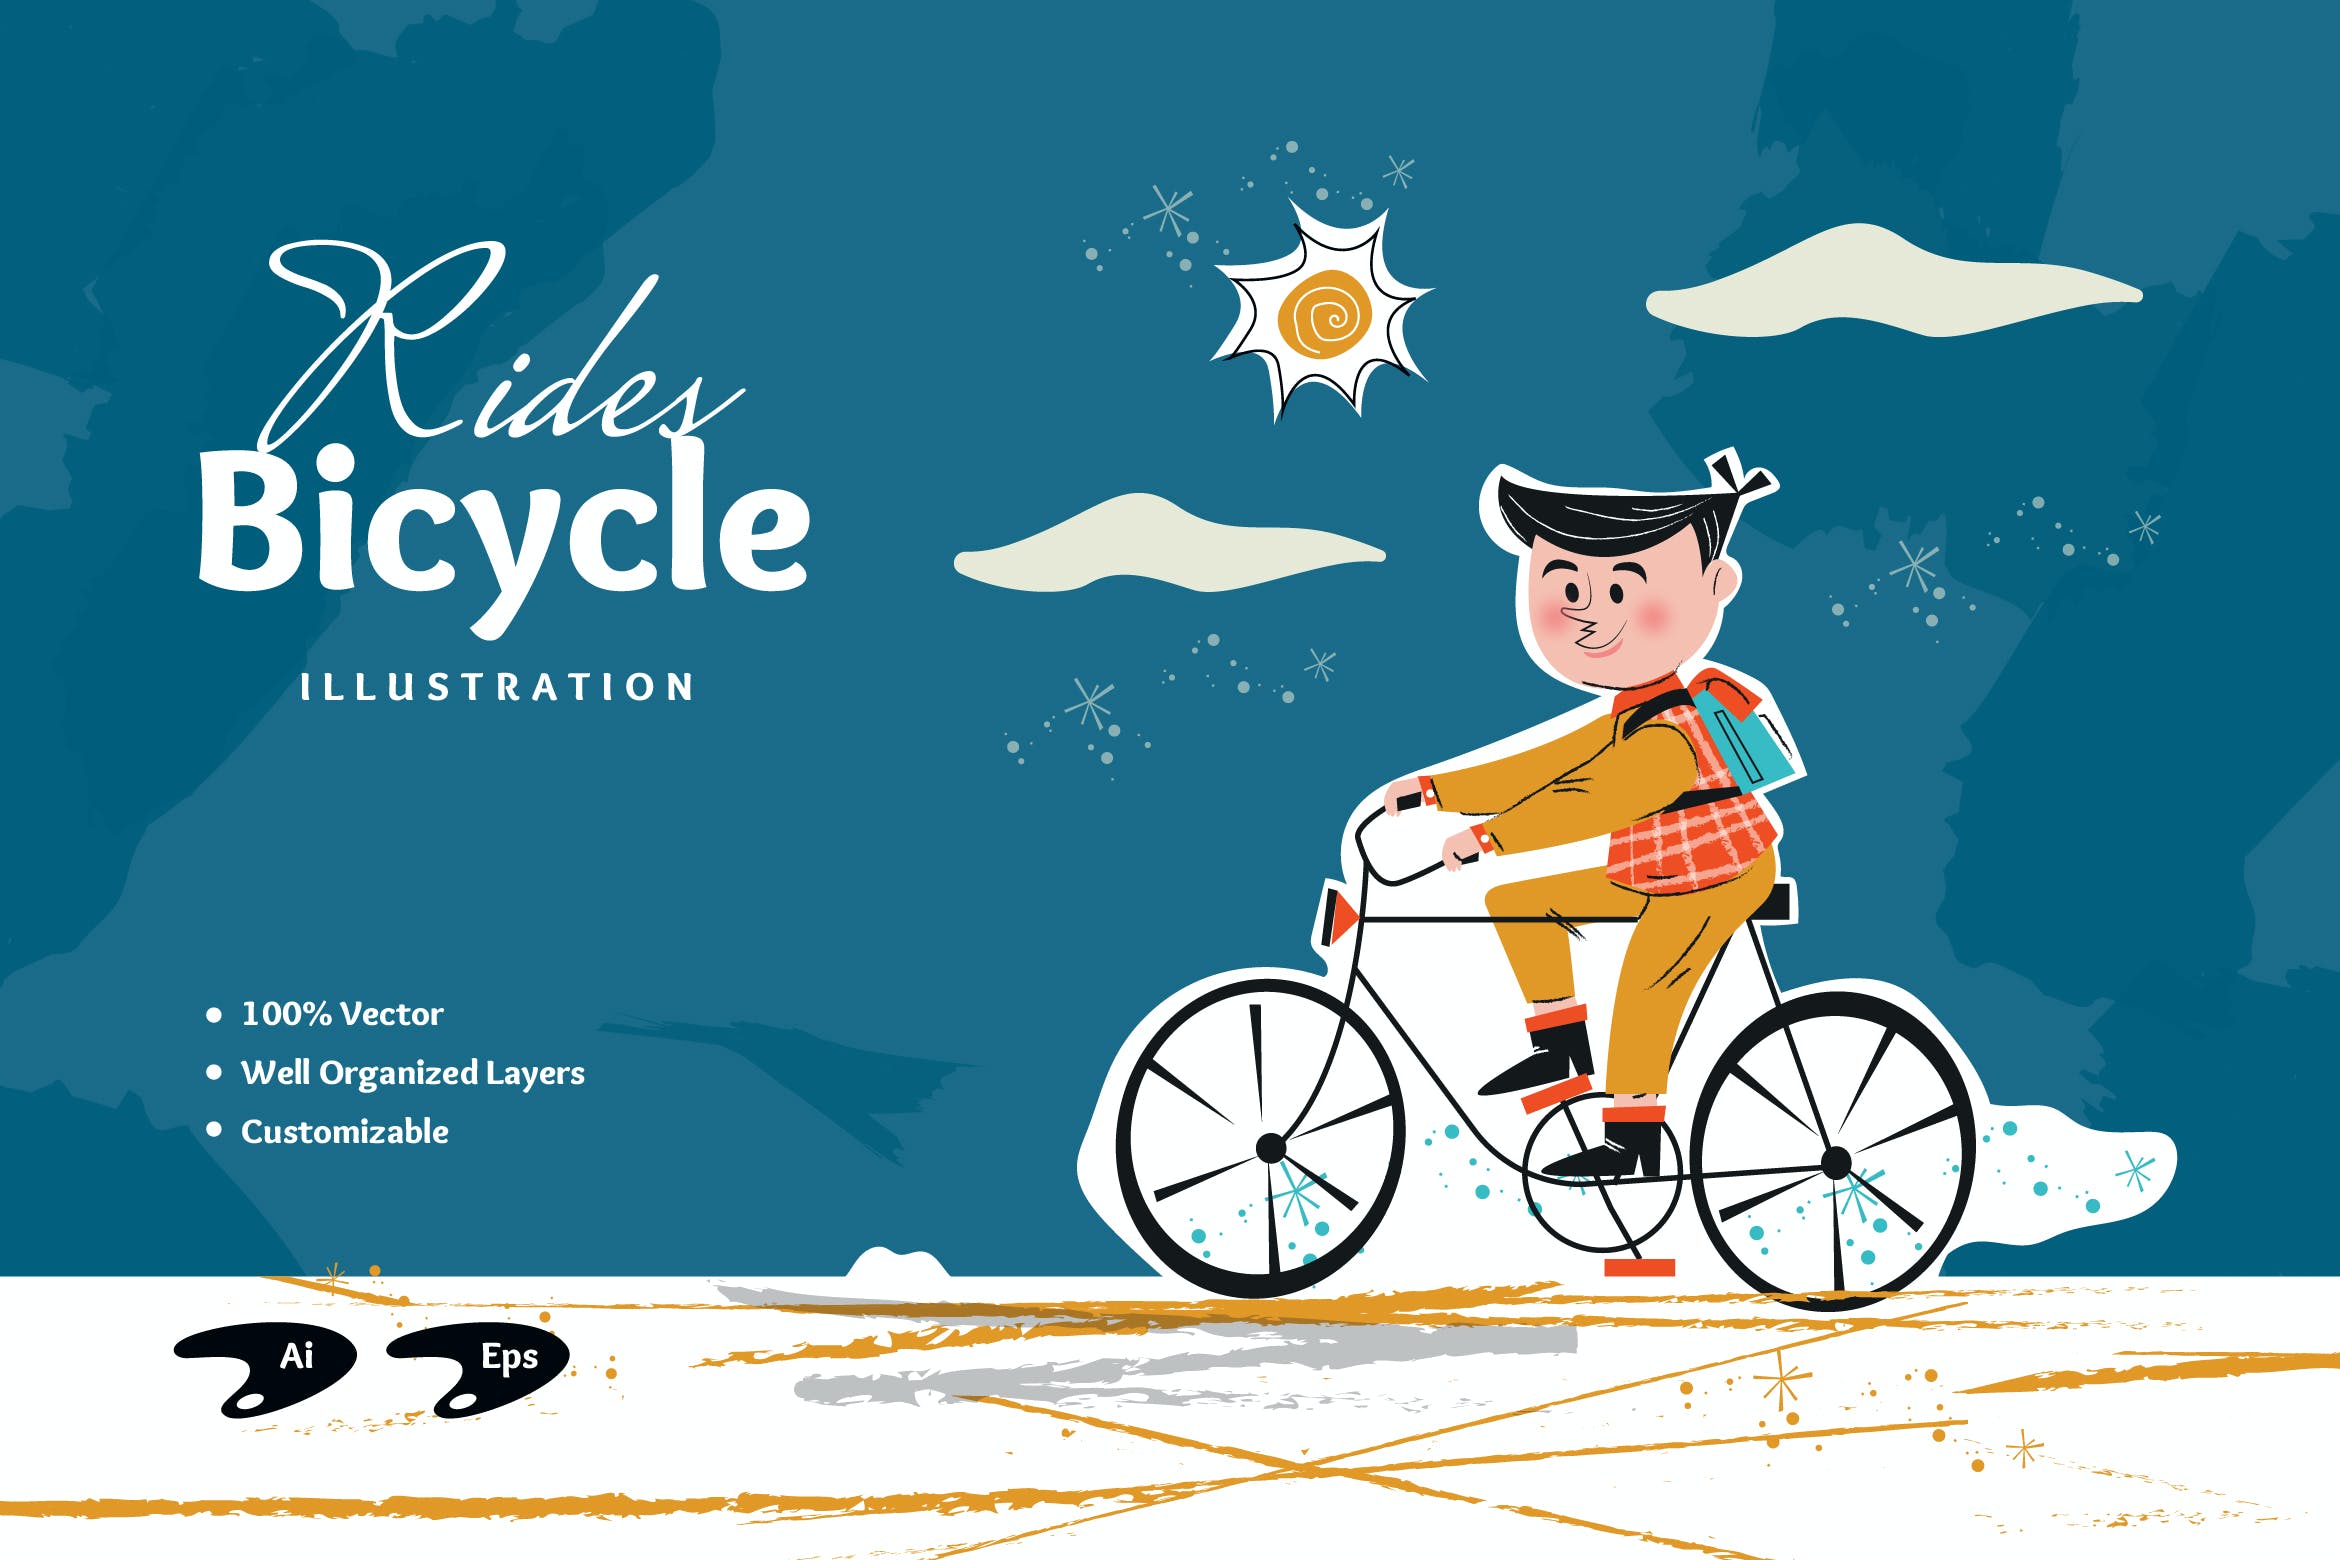 骑自行车场景矢量插画素材 Rides Bicycle Illustration